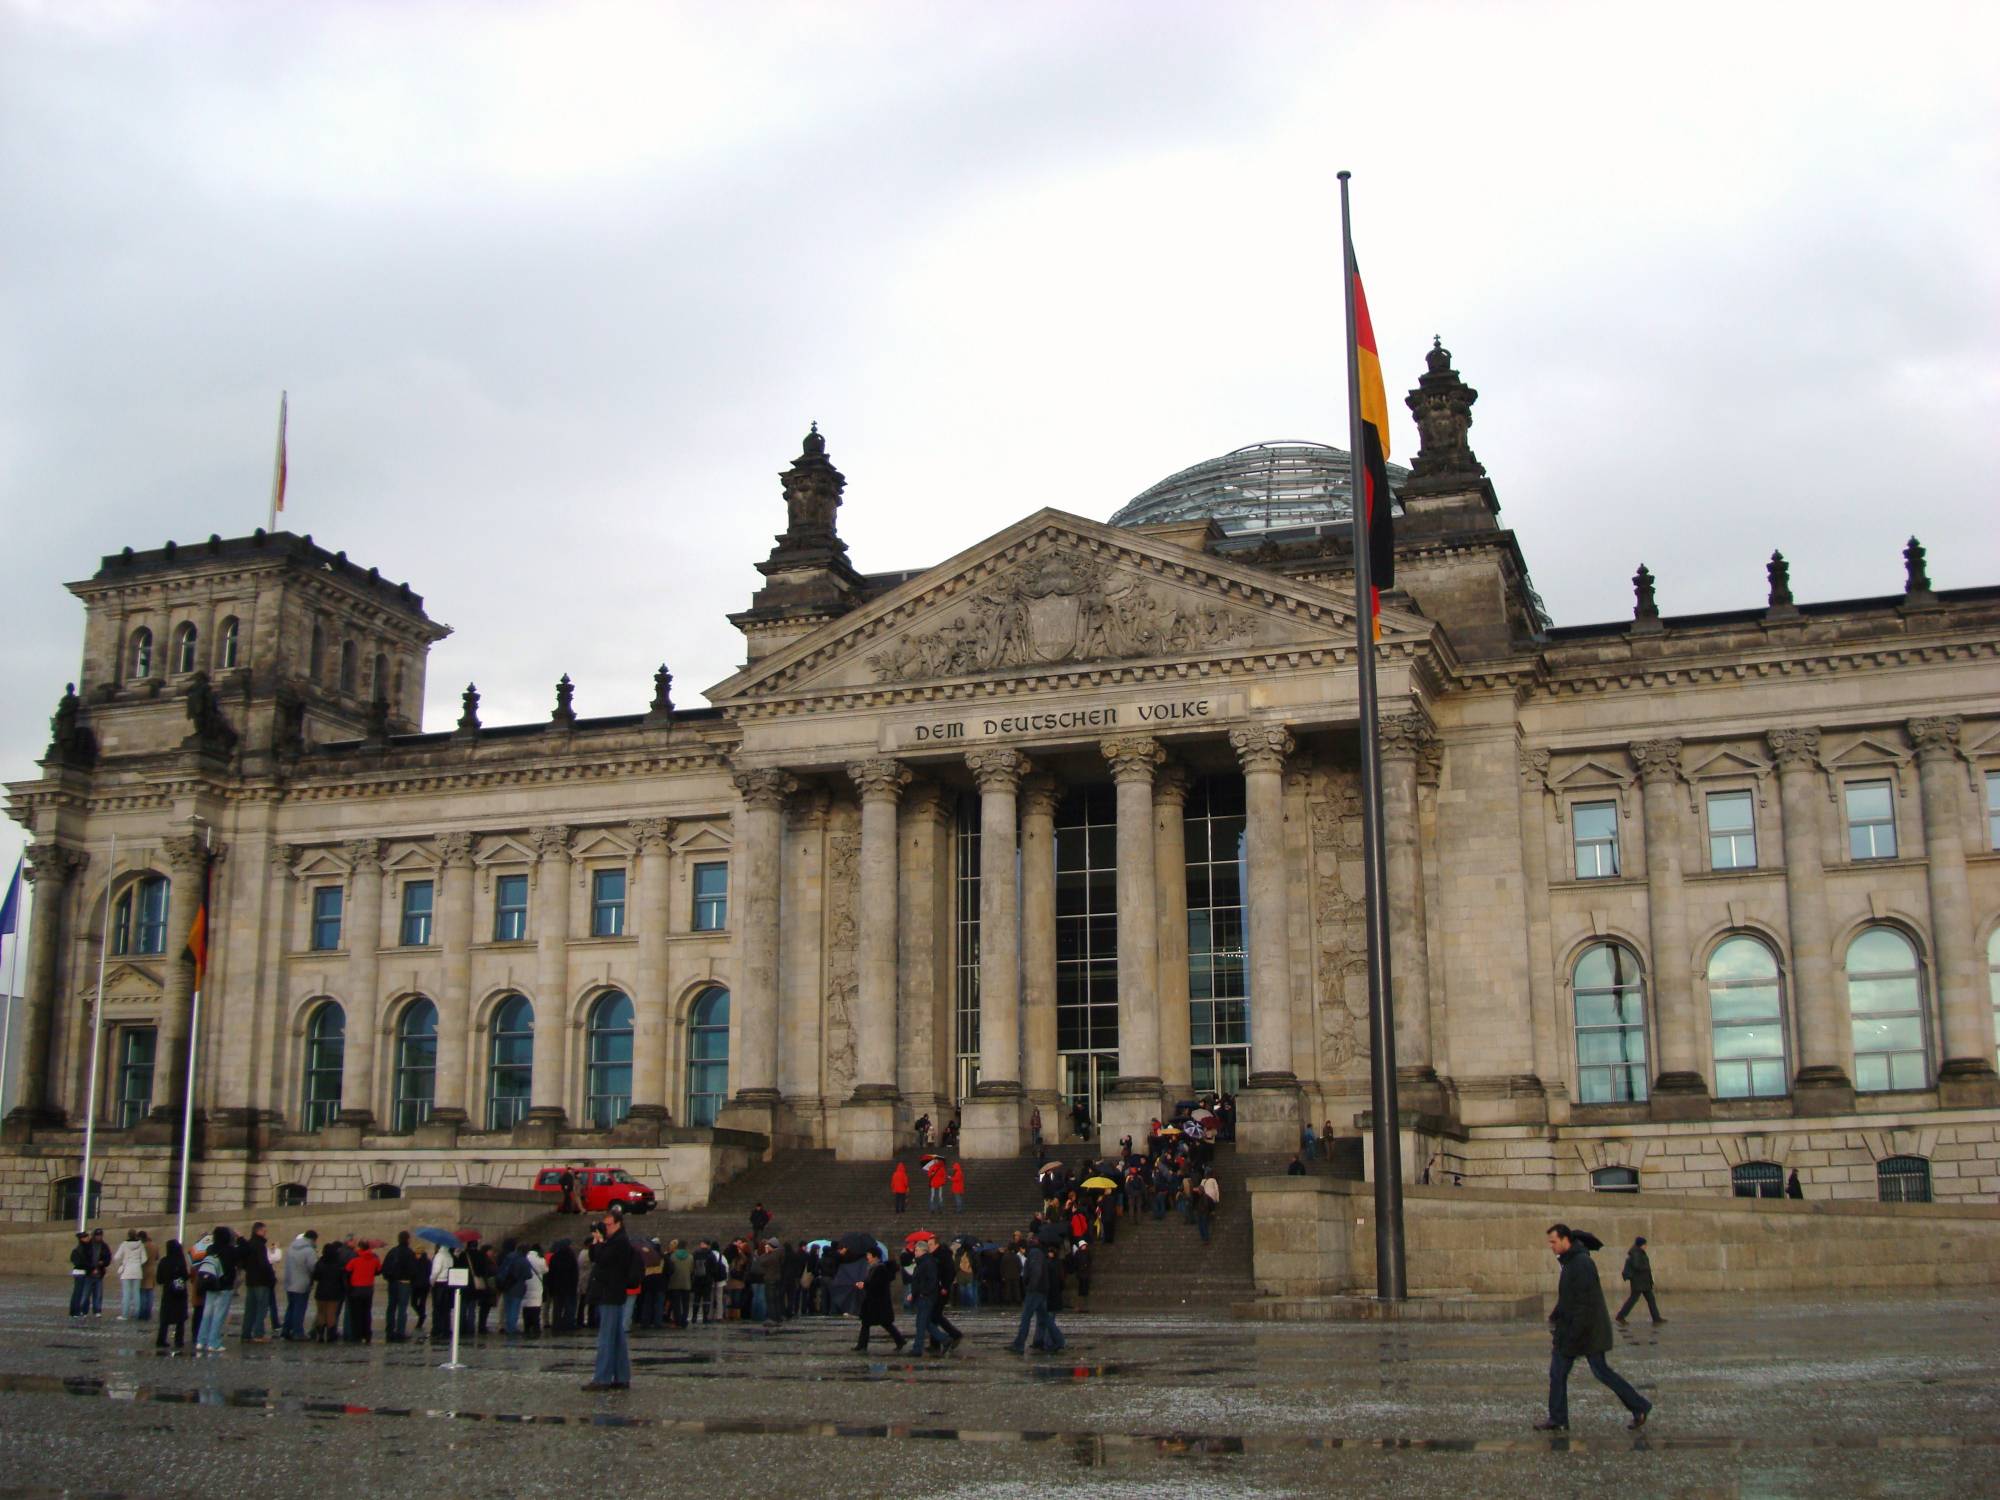 Berlin - German Parliament building